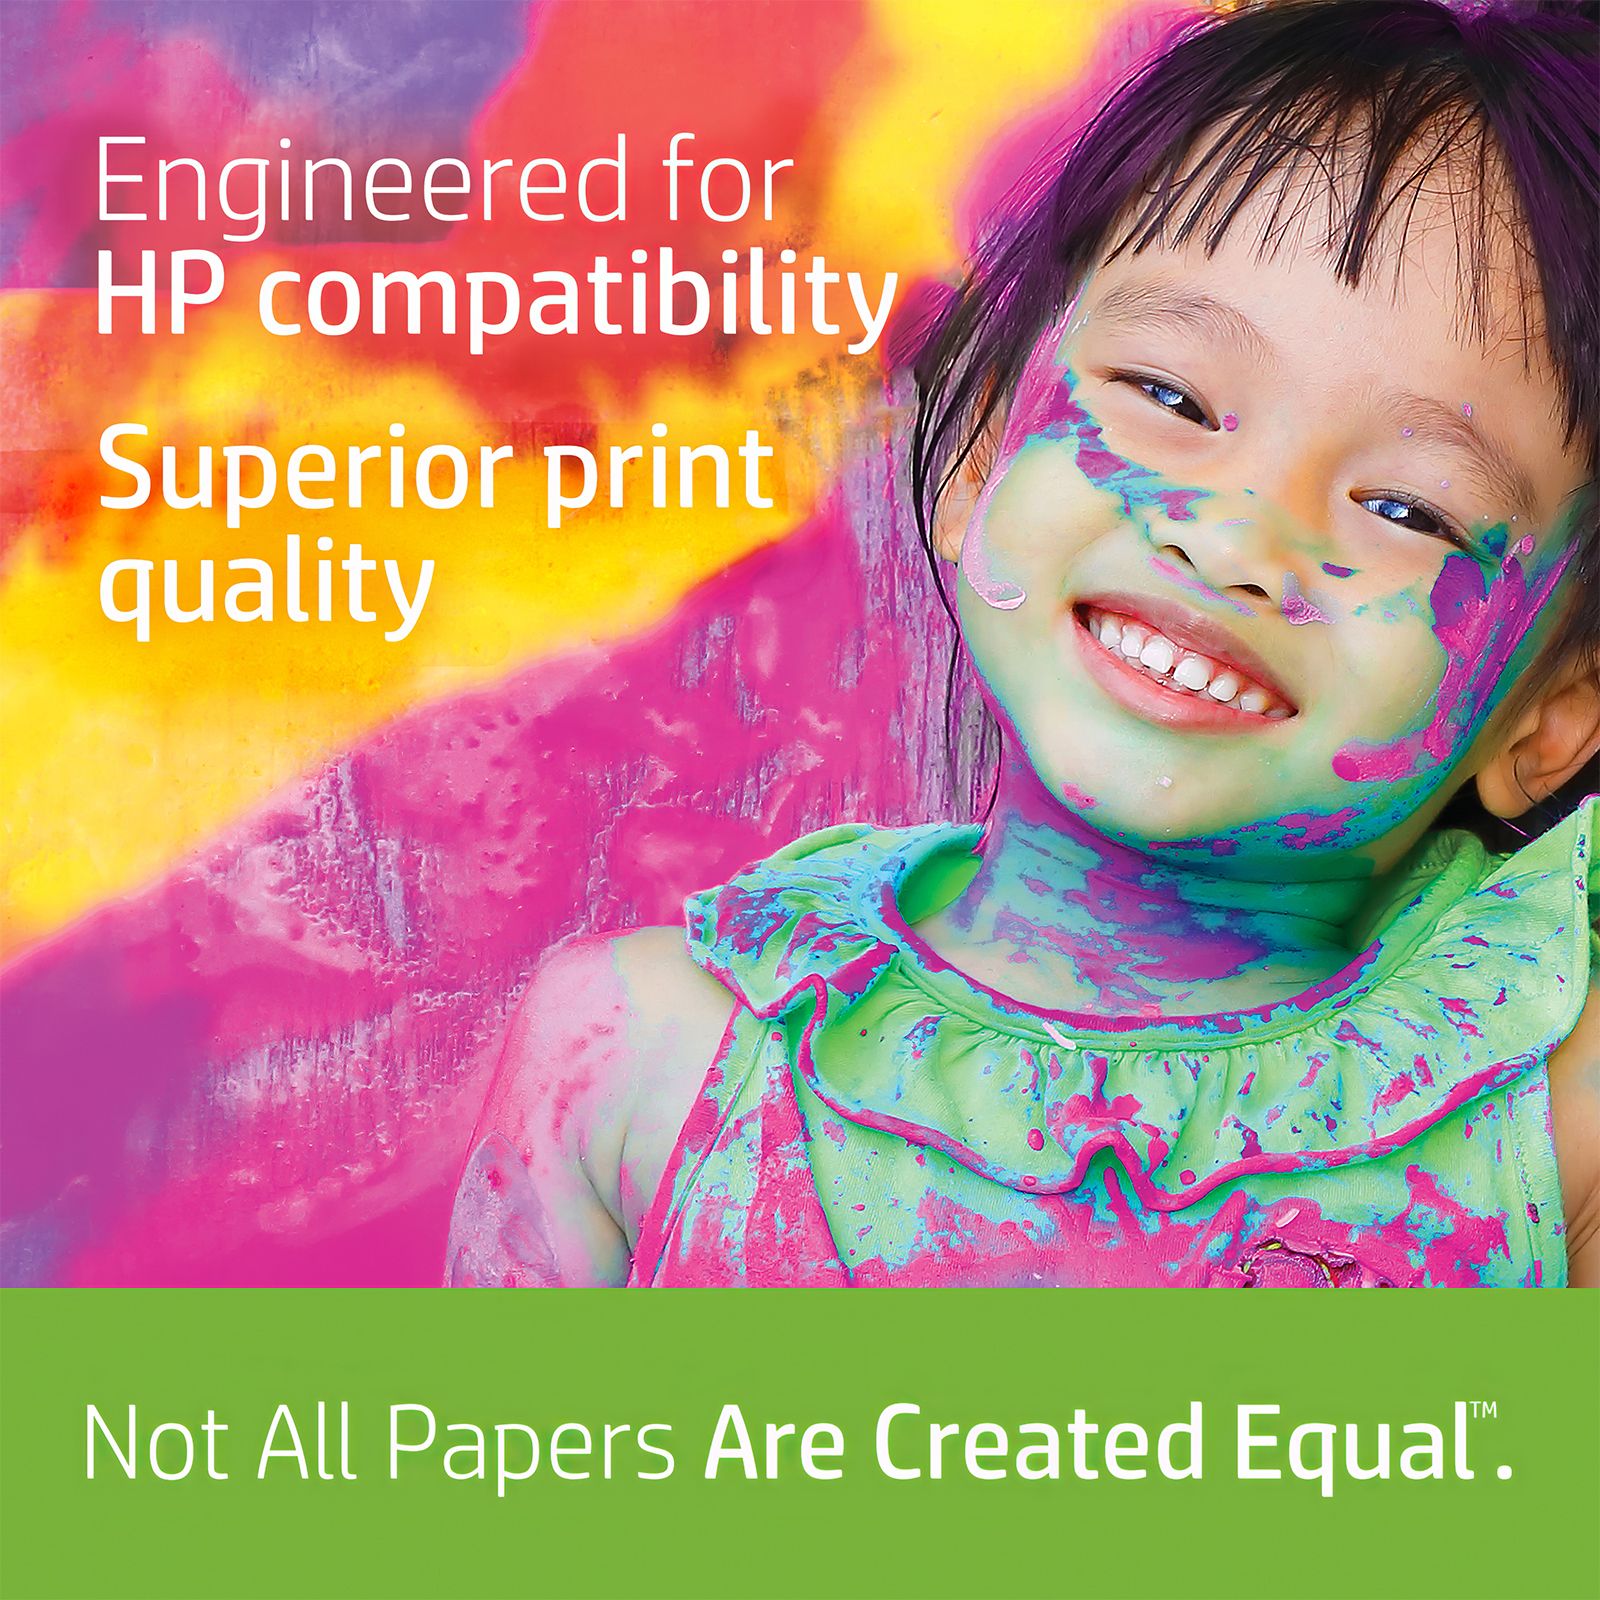 HP Home & Office Copy Paper 92 Brightness 20 lb. 8 1/2 x 11 8 Reams 4000 Sheets/Carton